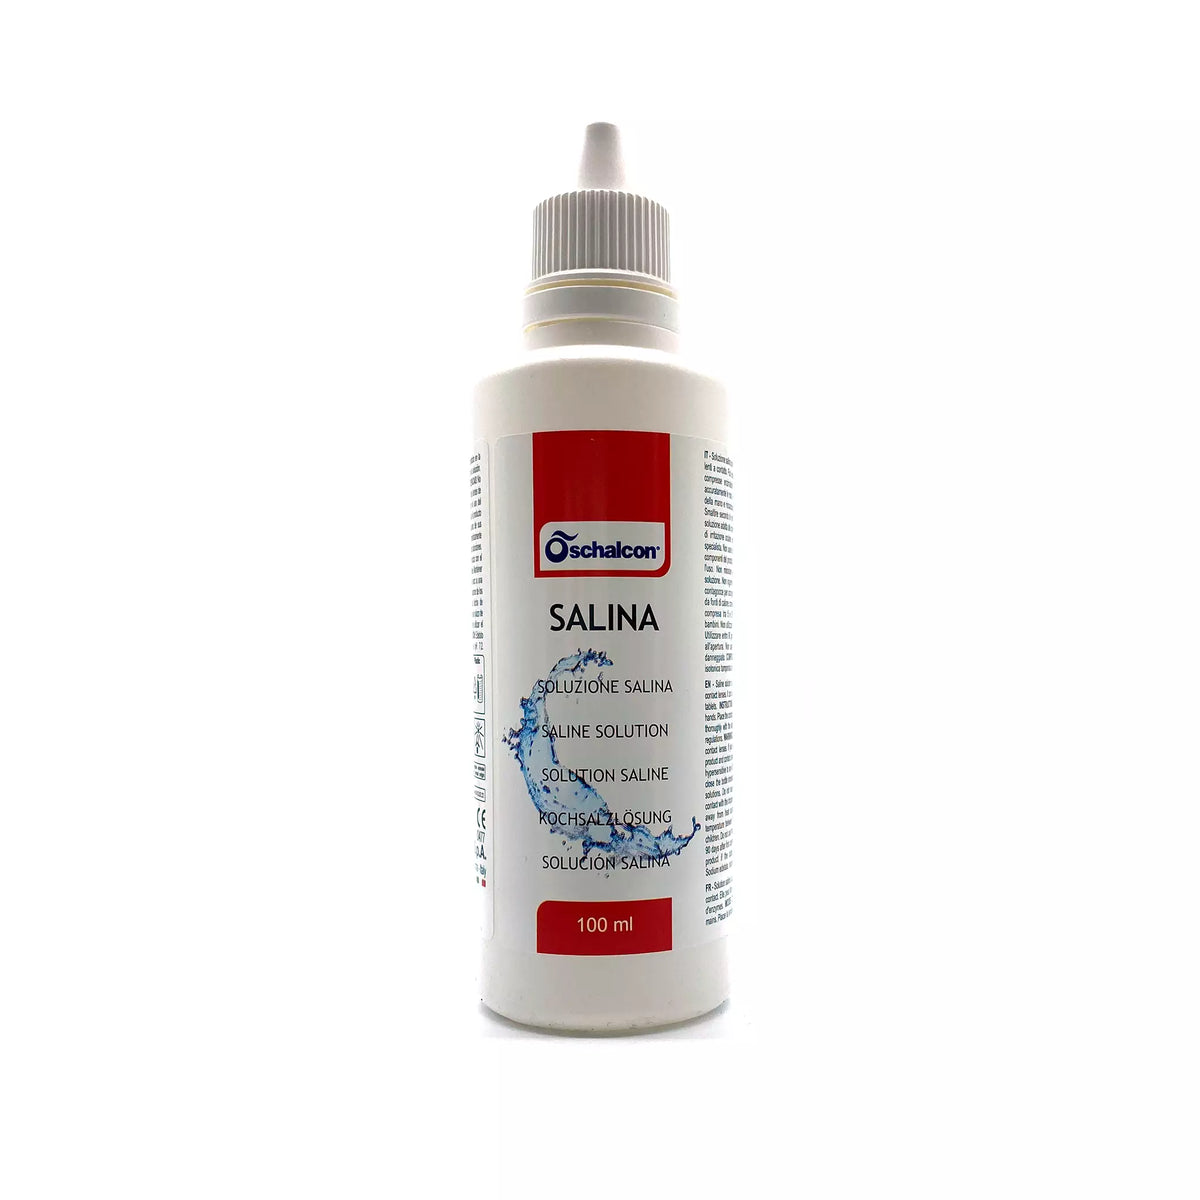 Salina 100ml - Saline solution for contact lenses